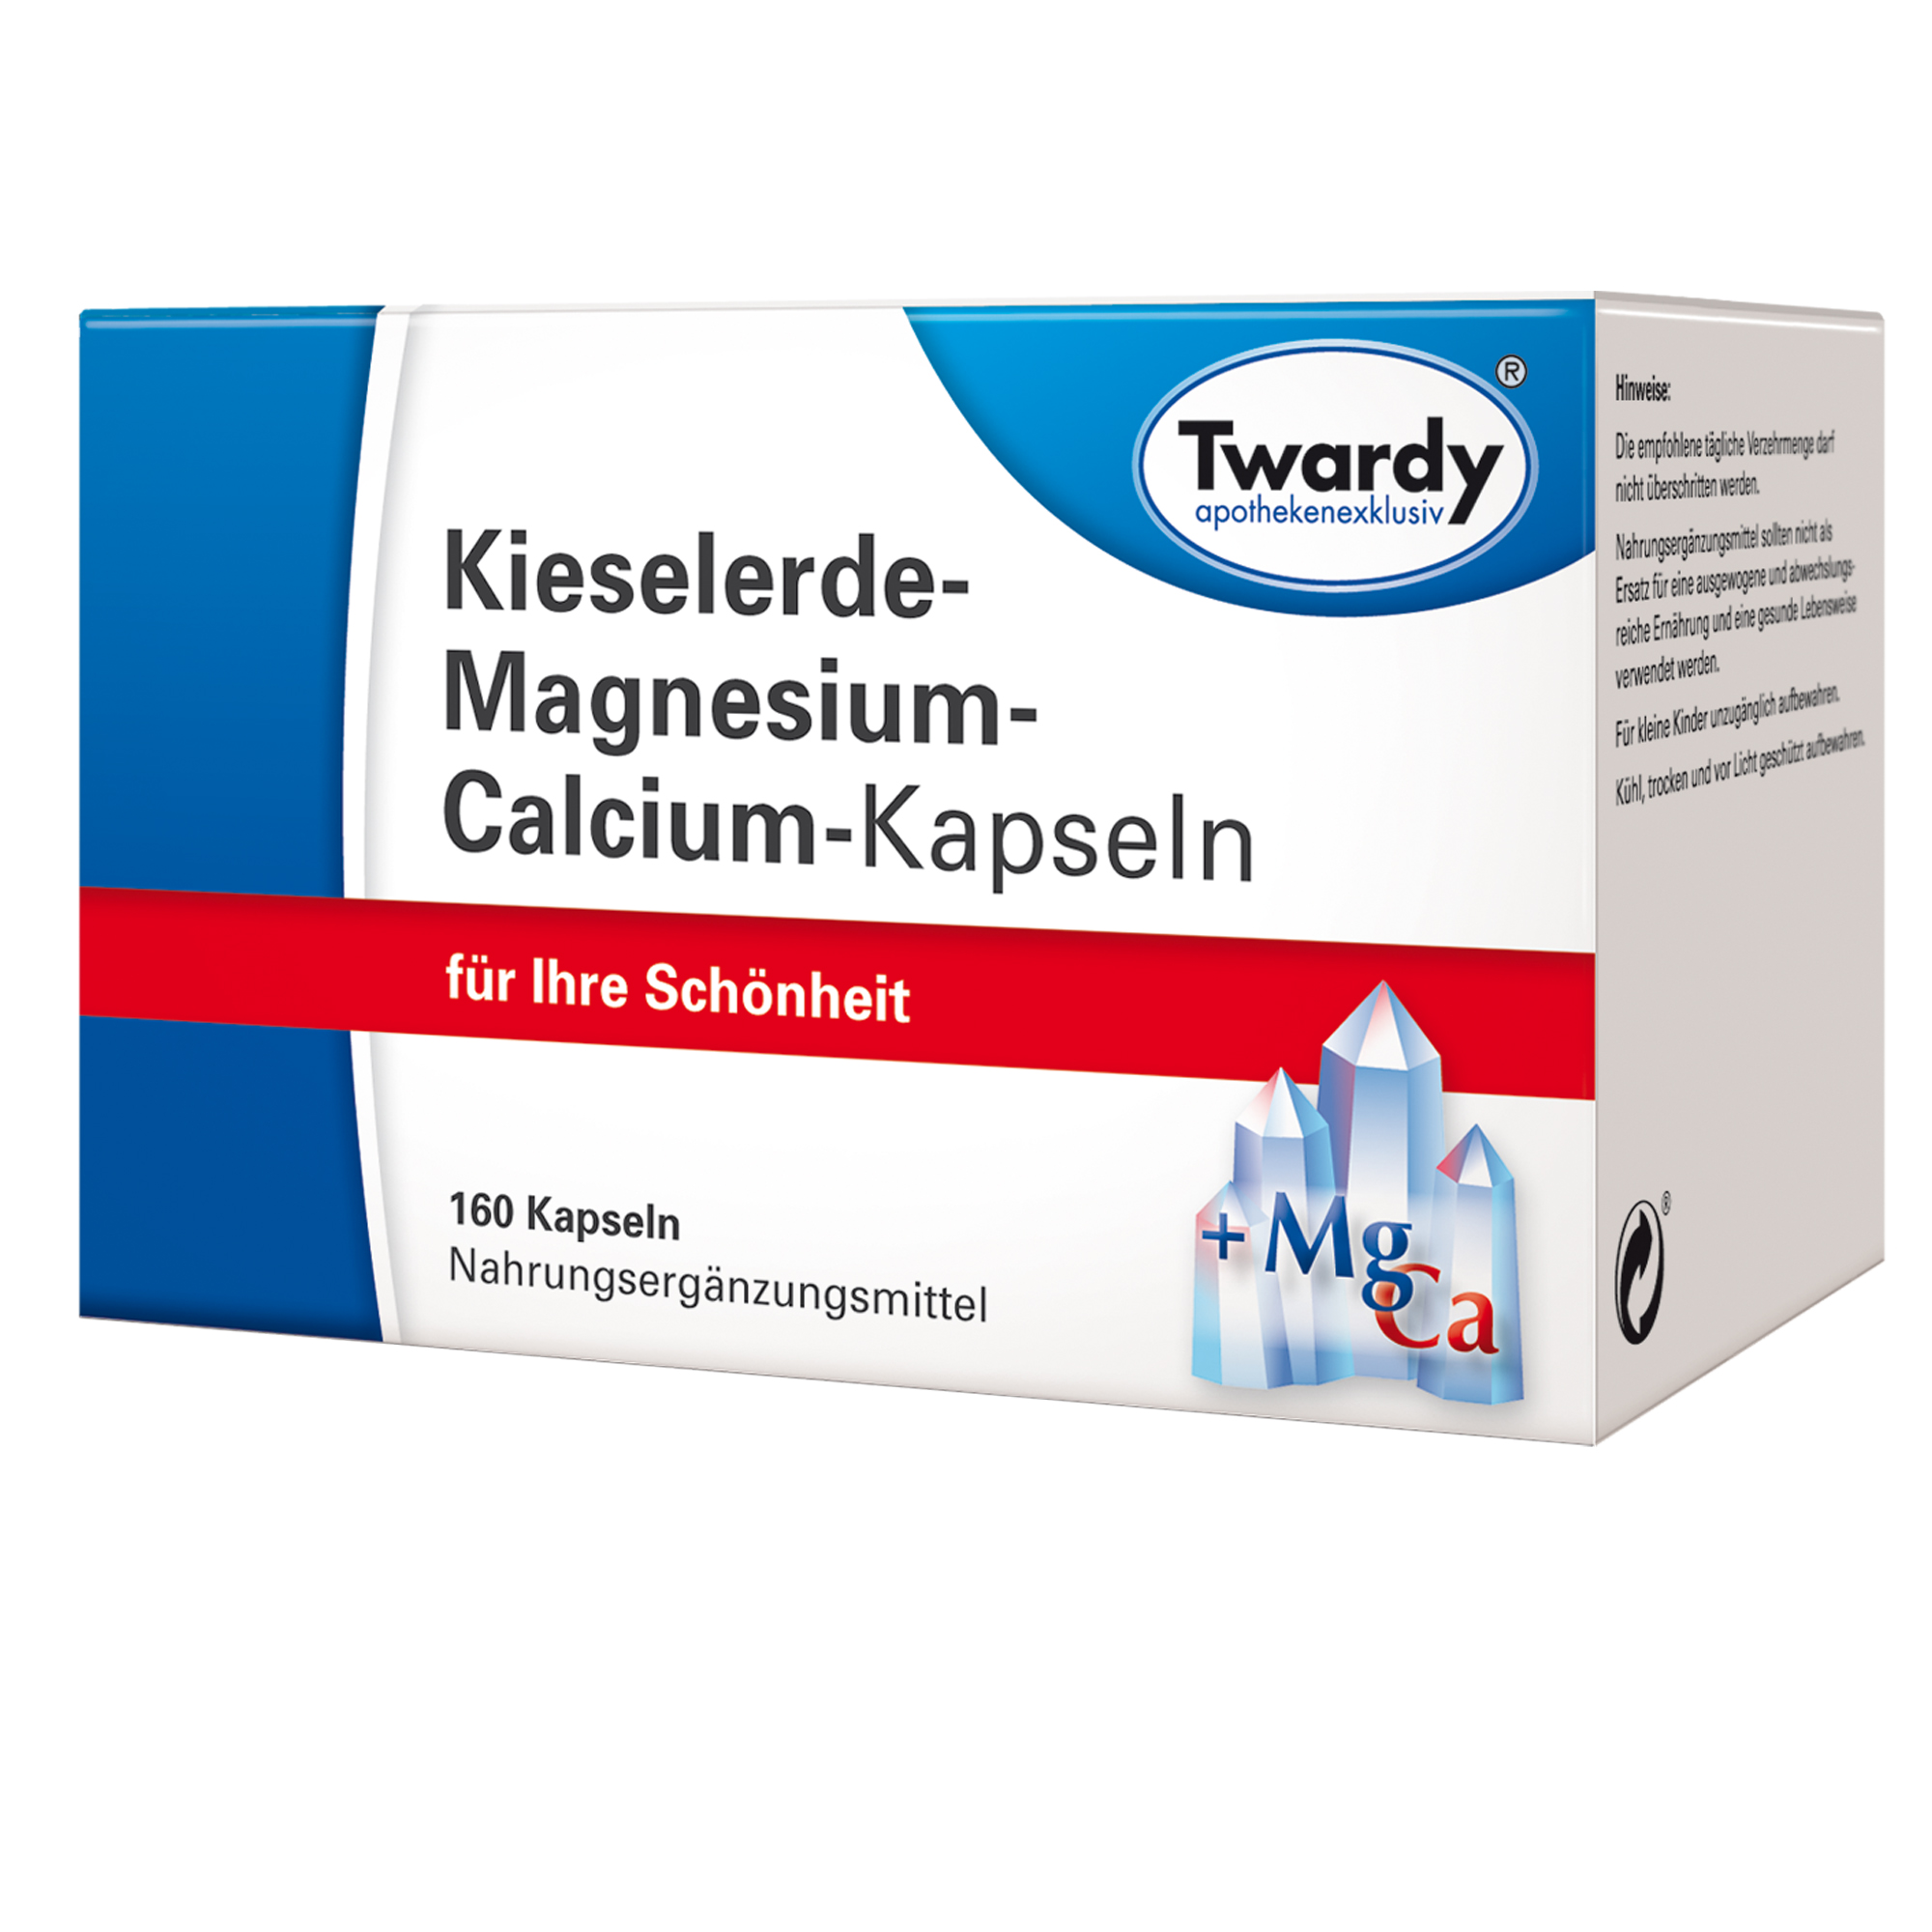 Kieselerde-Magnesium-Calcium-Kapseln 160